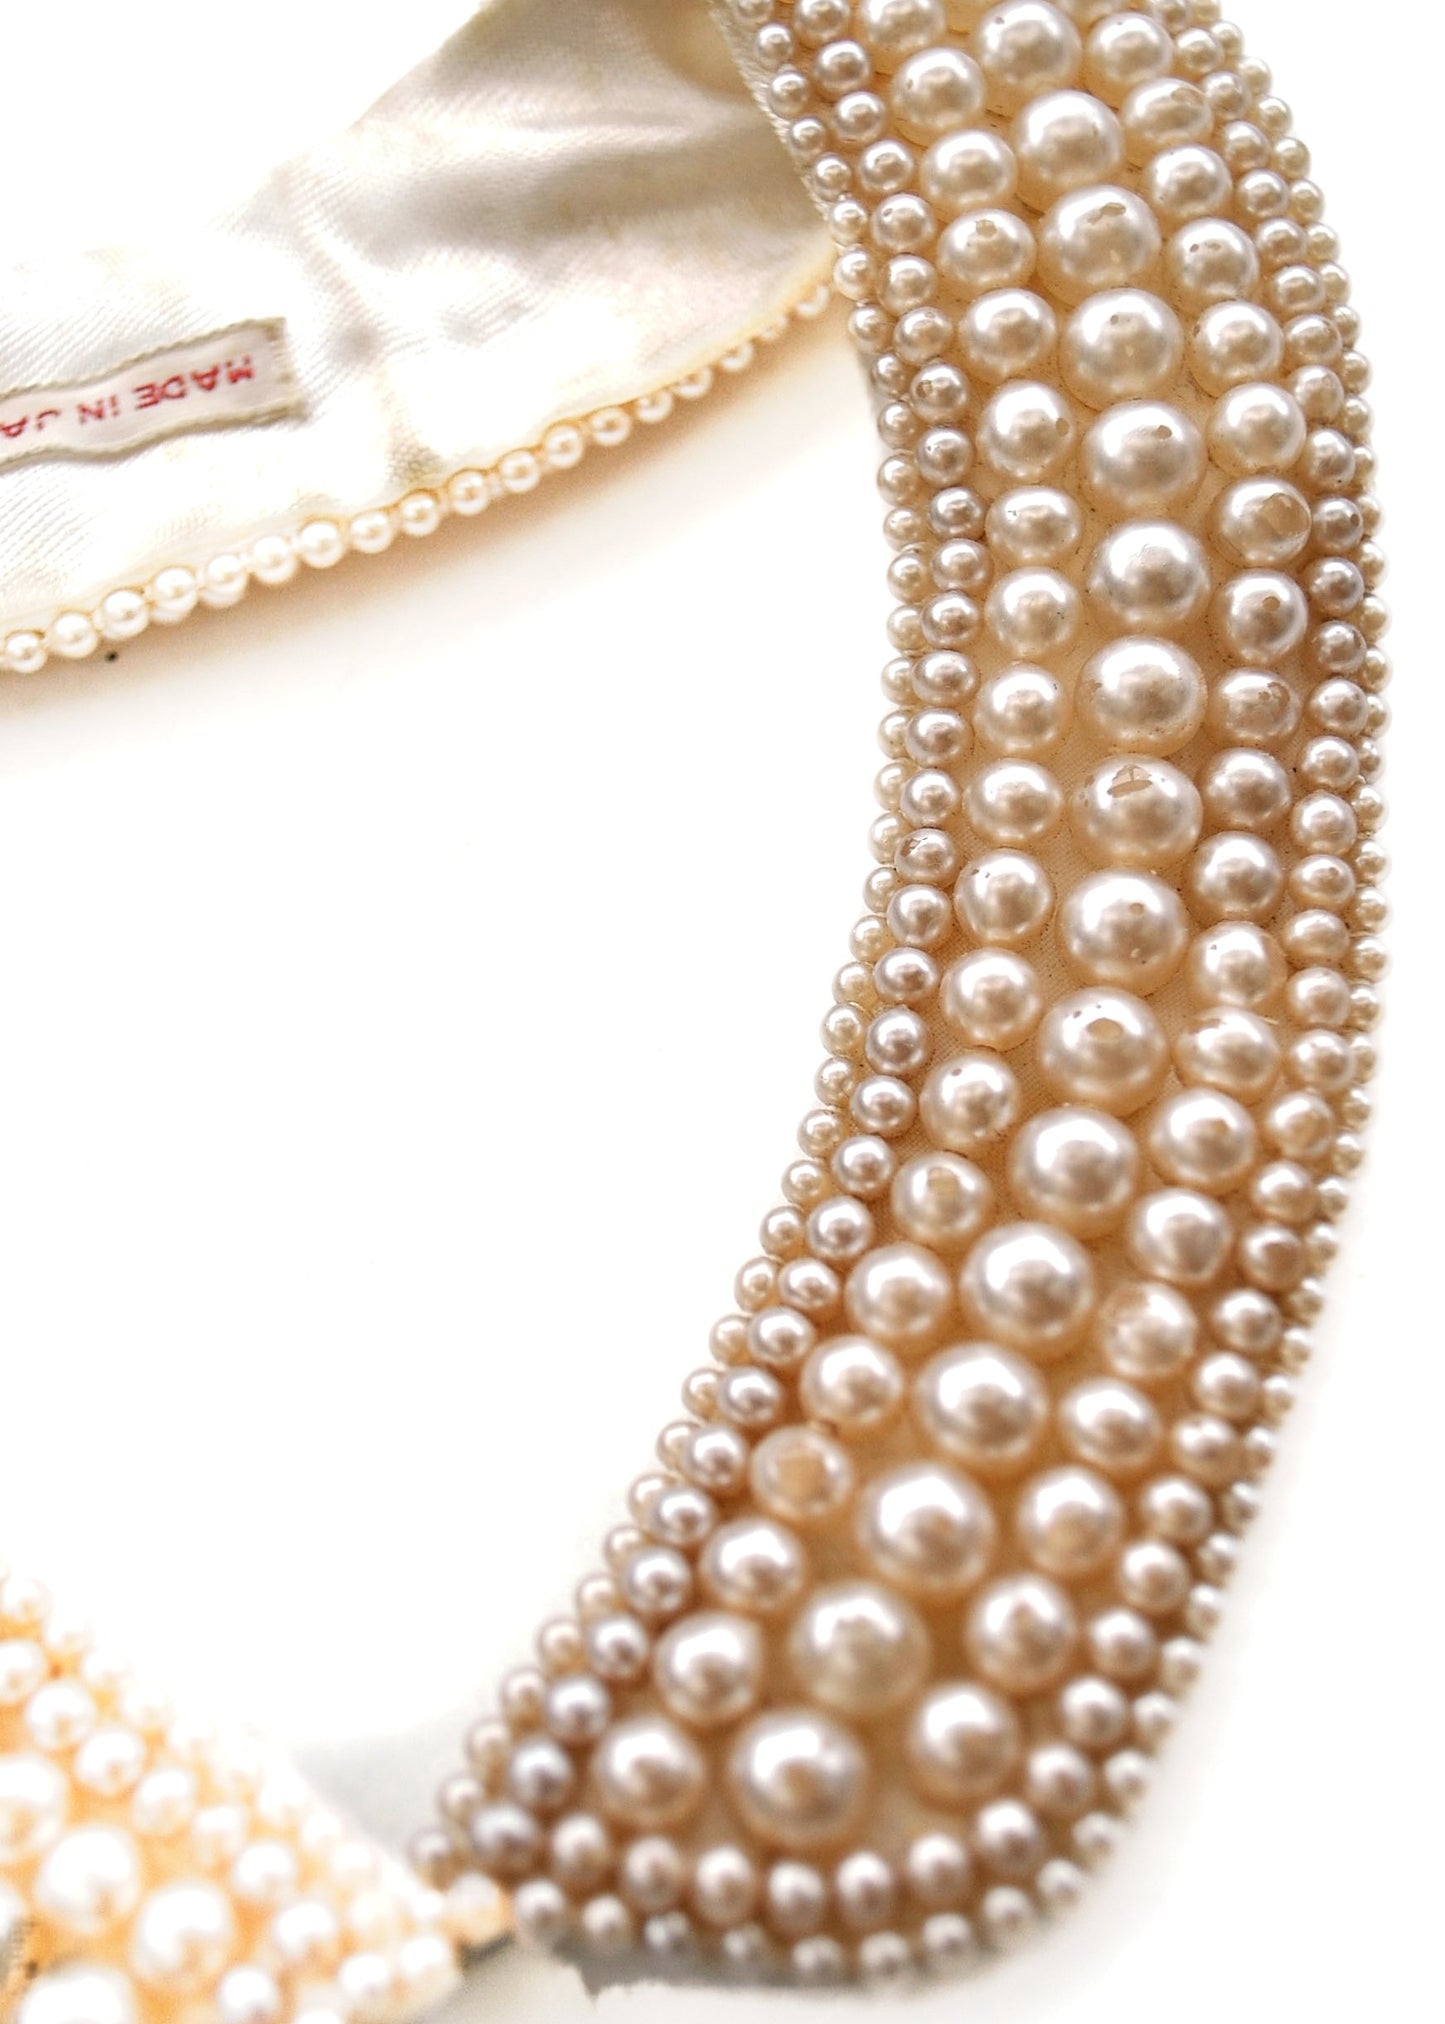 1950s Detachable Faux Pearl Collar